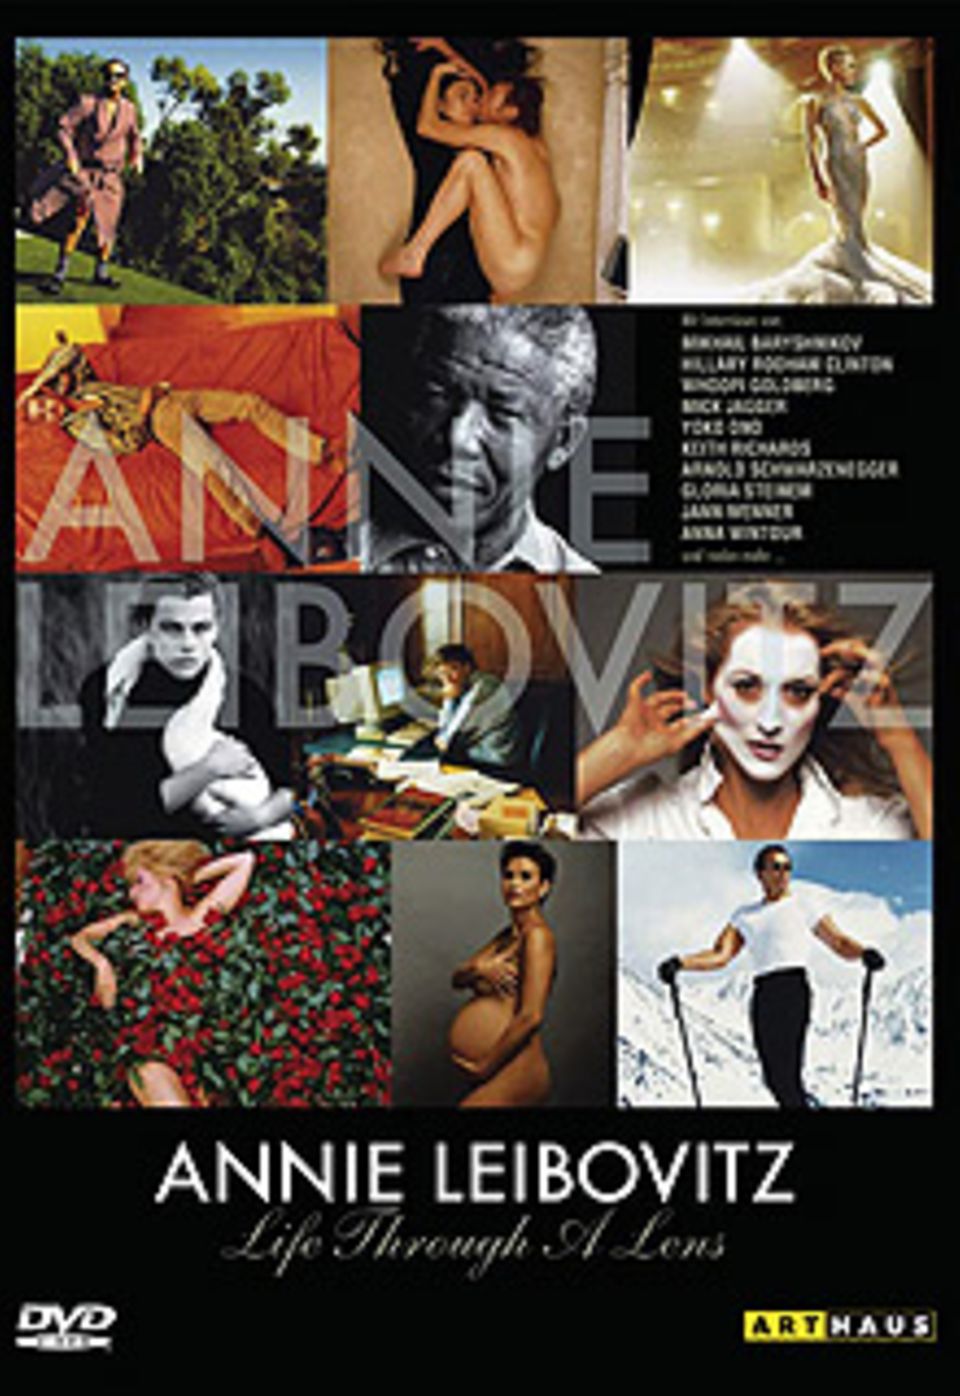 Dokumentarfilm: "Annie Leibovitz - Life through a Lens"